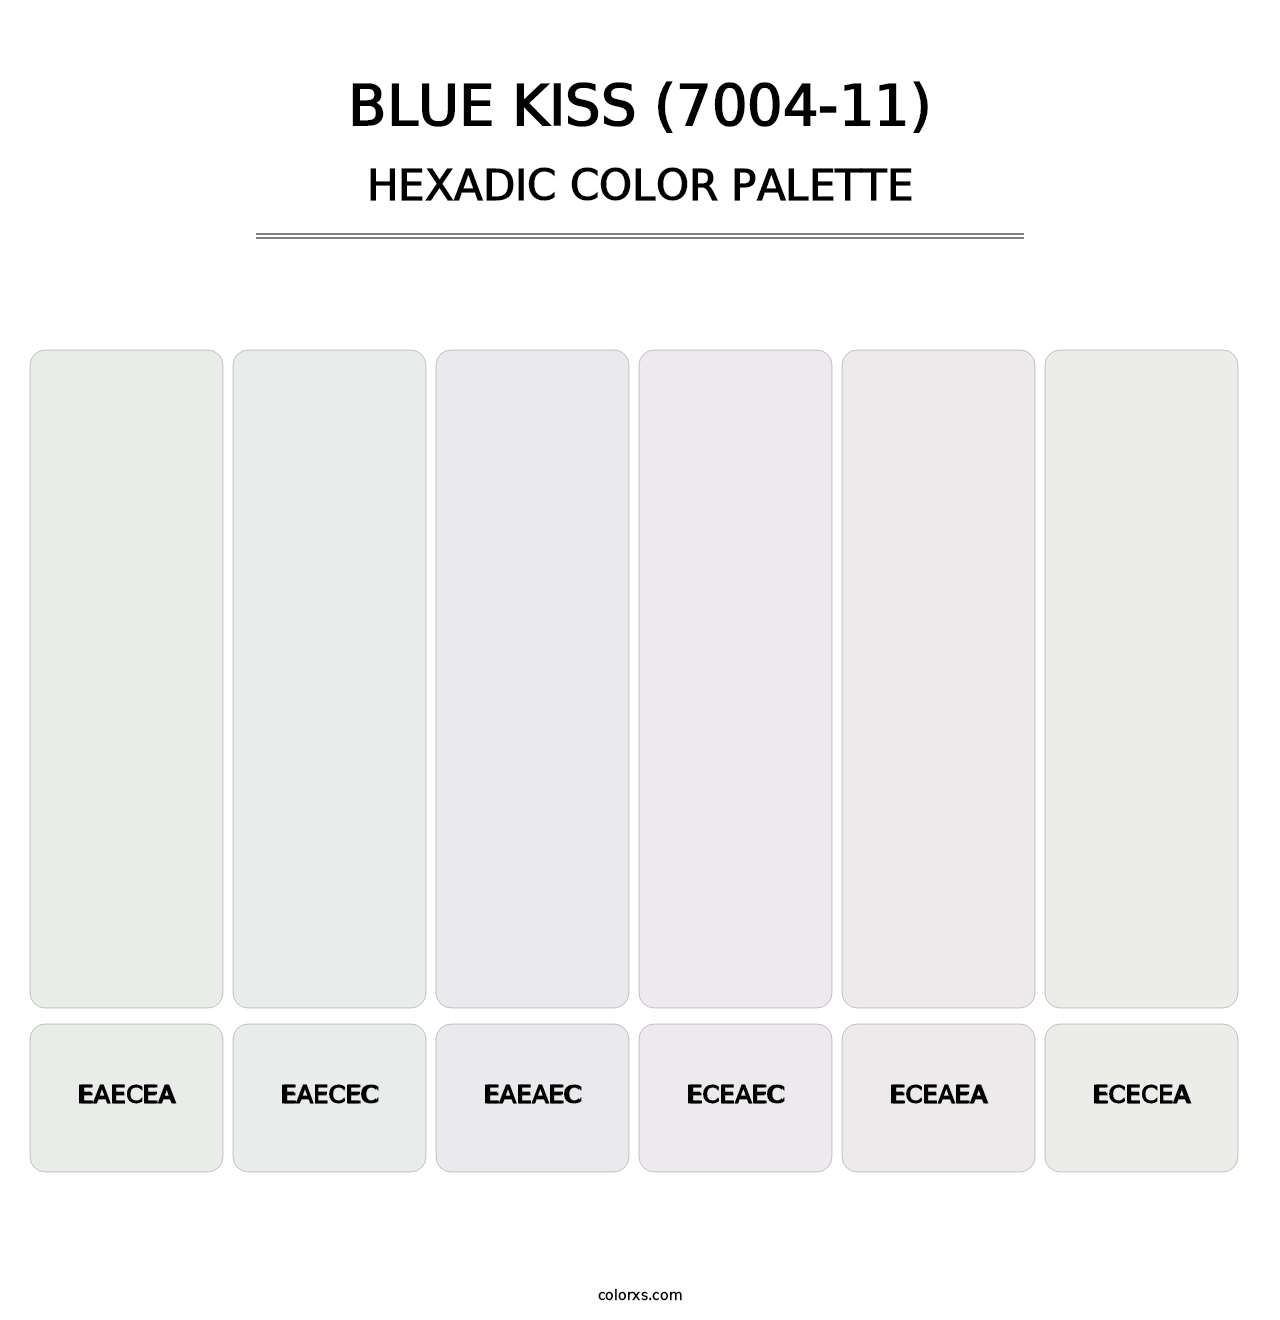 Blue Kiss (7004-11) - Hexadic Color Palette